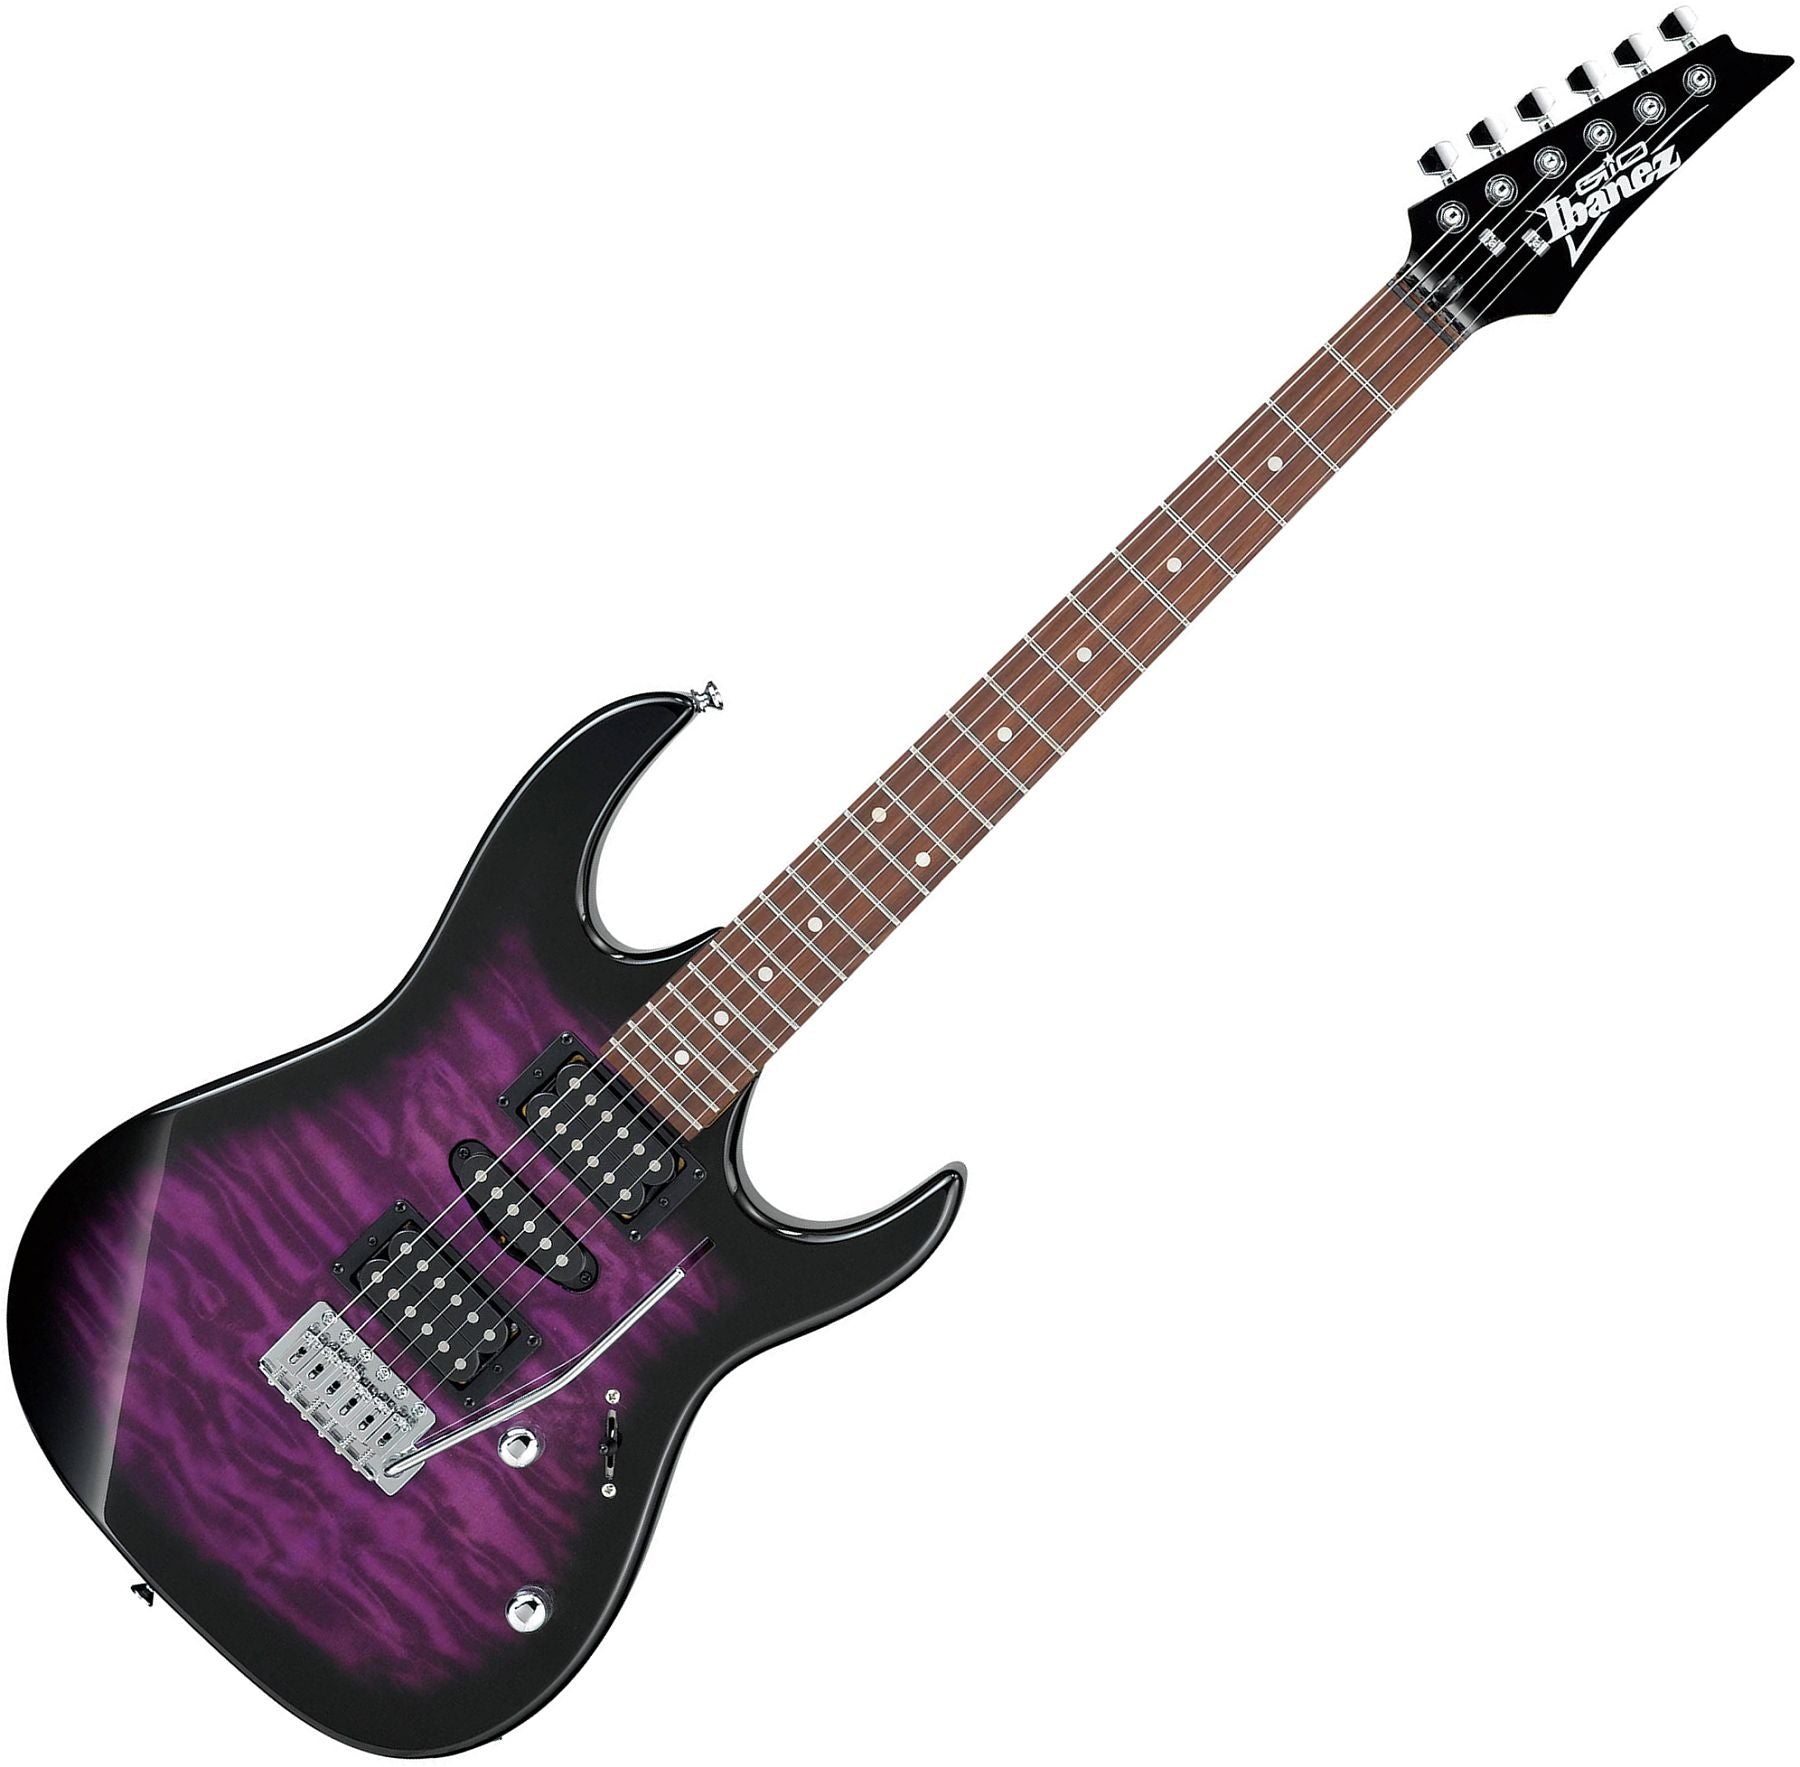 Ibanez Gio GRX70QA Electric Guitar - Transparent Violet Sunburst 